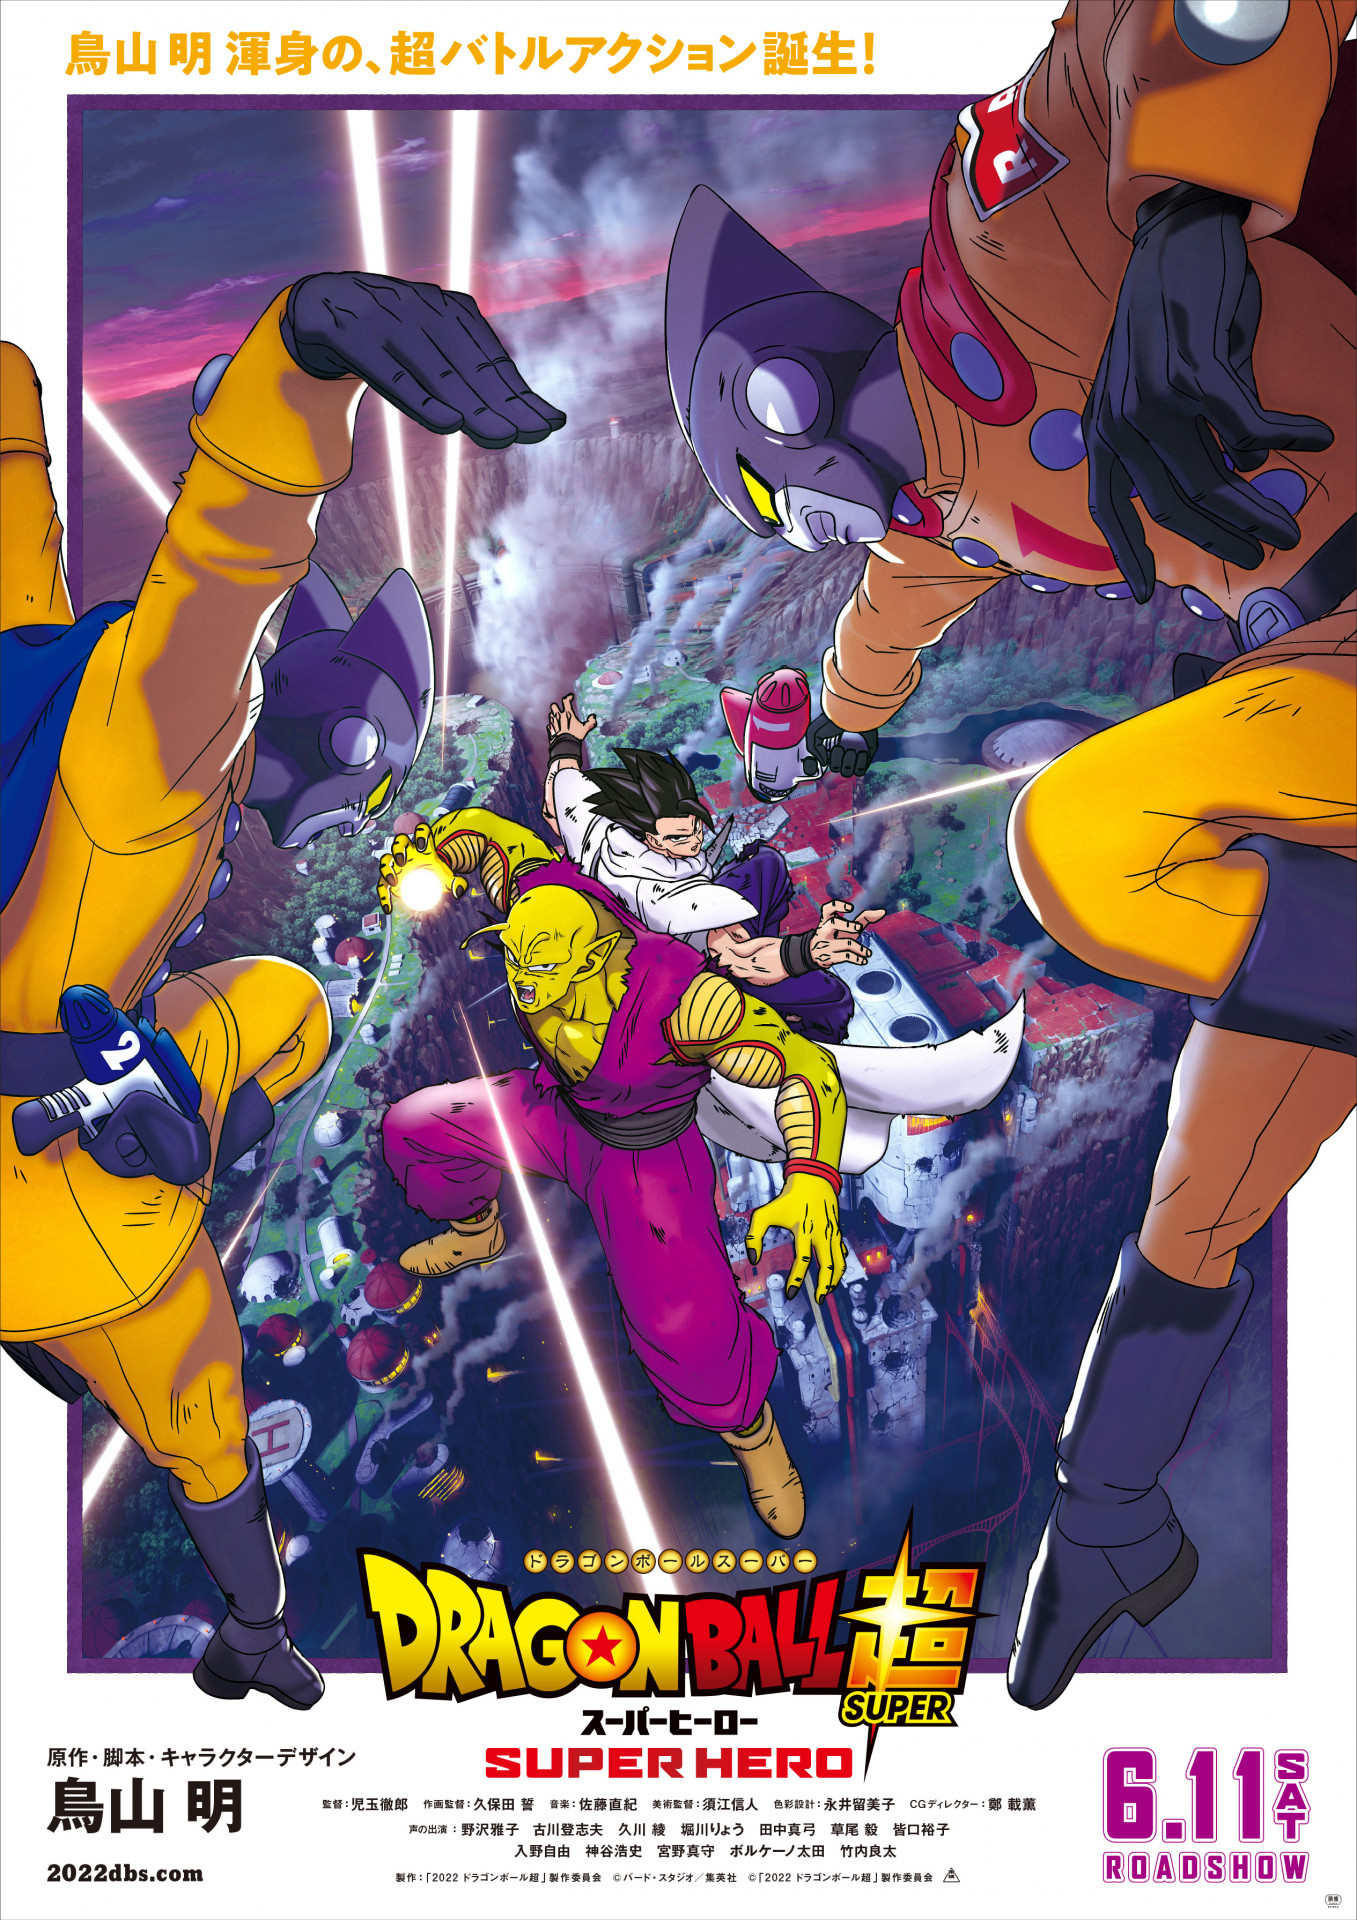 [New Release Date Announcement for Dragon Ball Super SUPER HERO